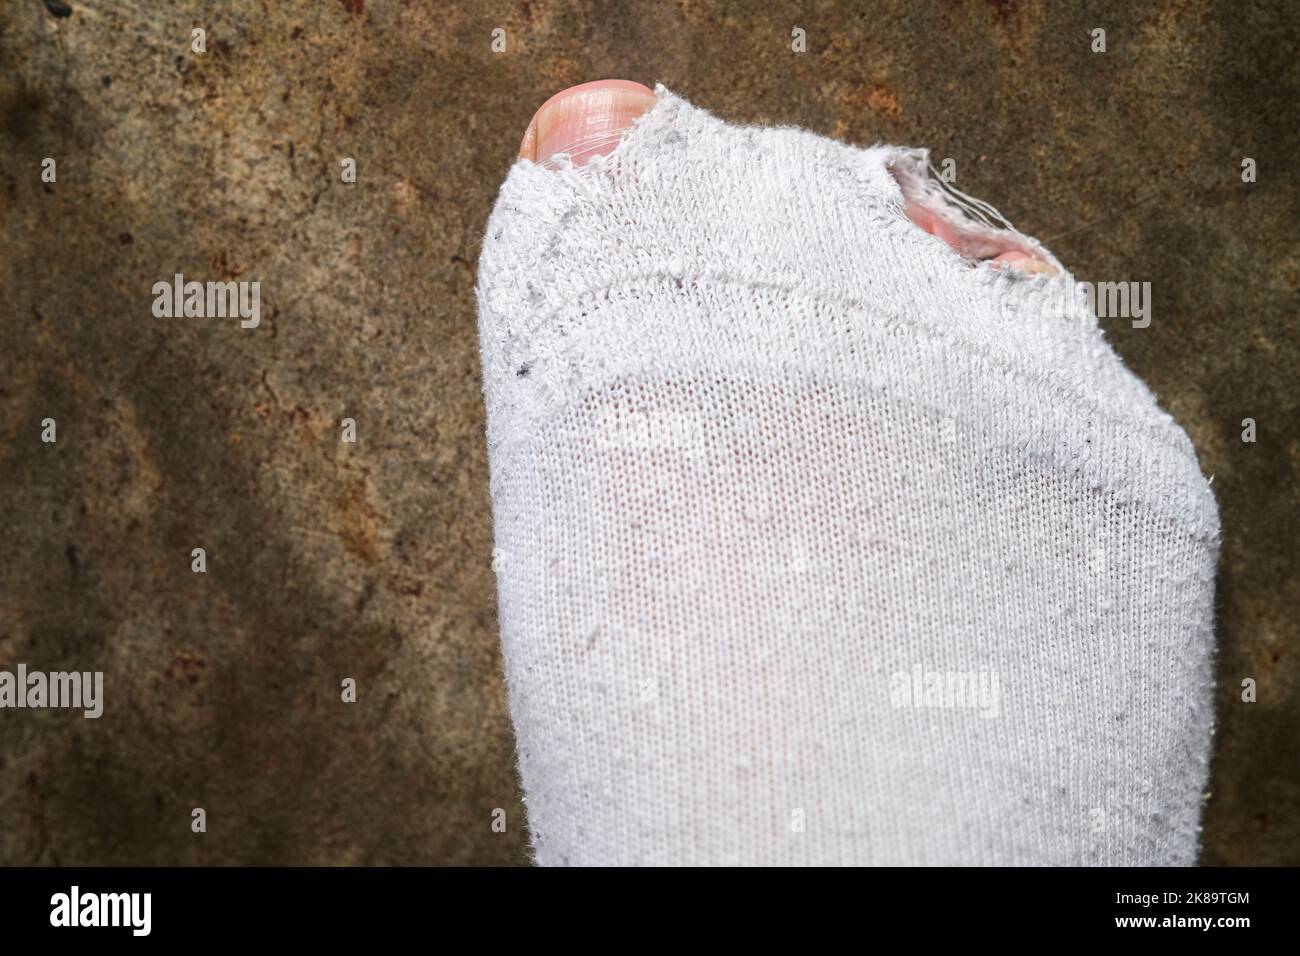 Man toes poking through holes in white socks, hardship concept Stock Photo